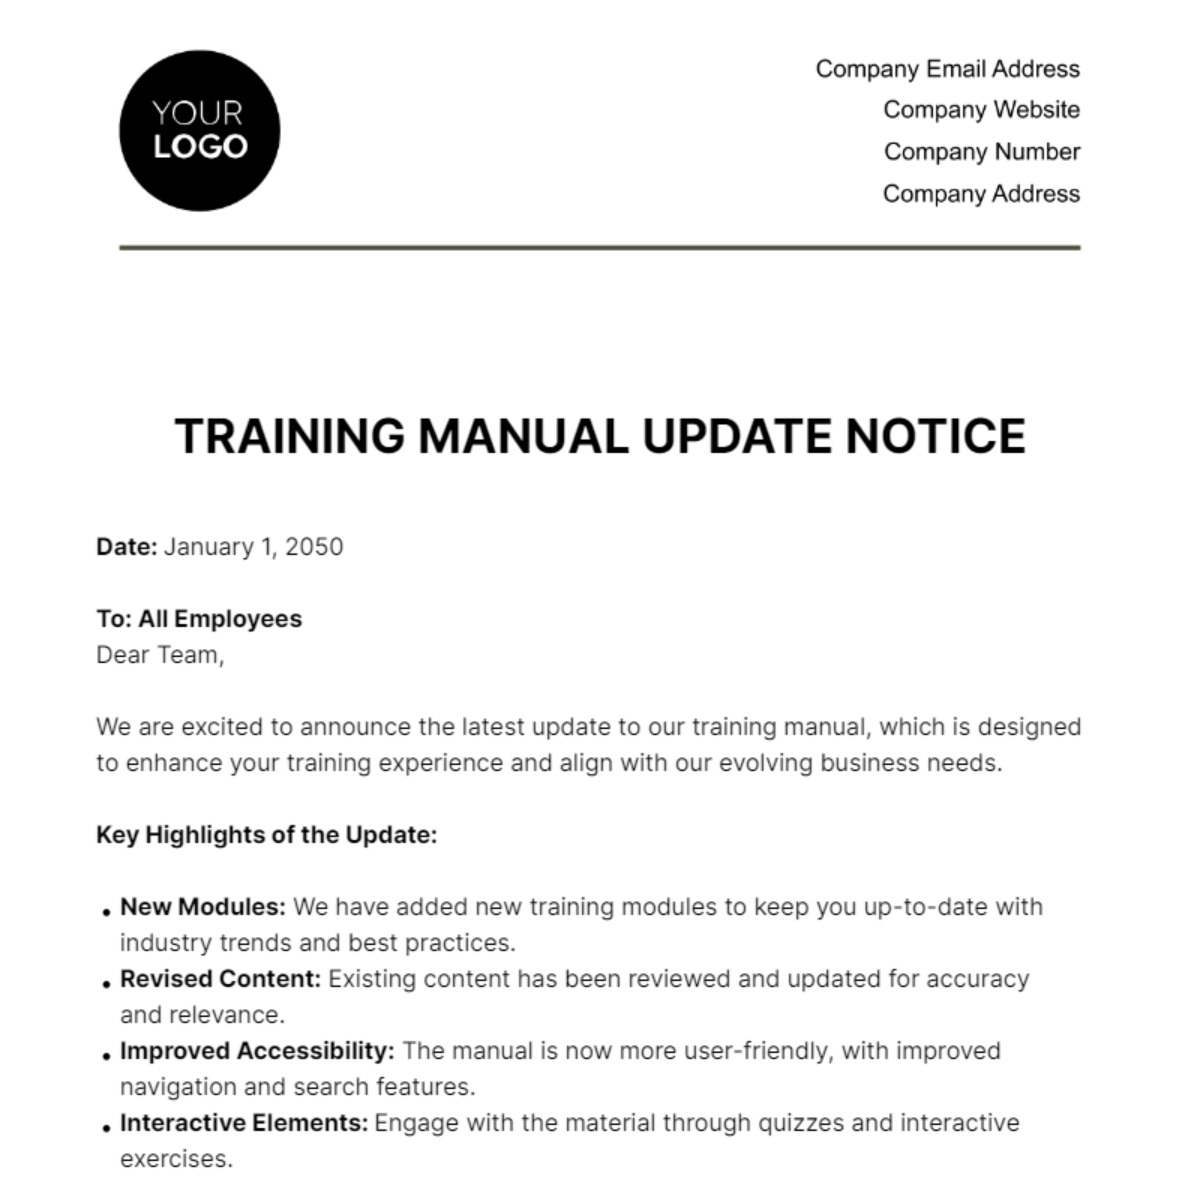 Training Manual Update Notice HR Template